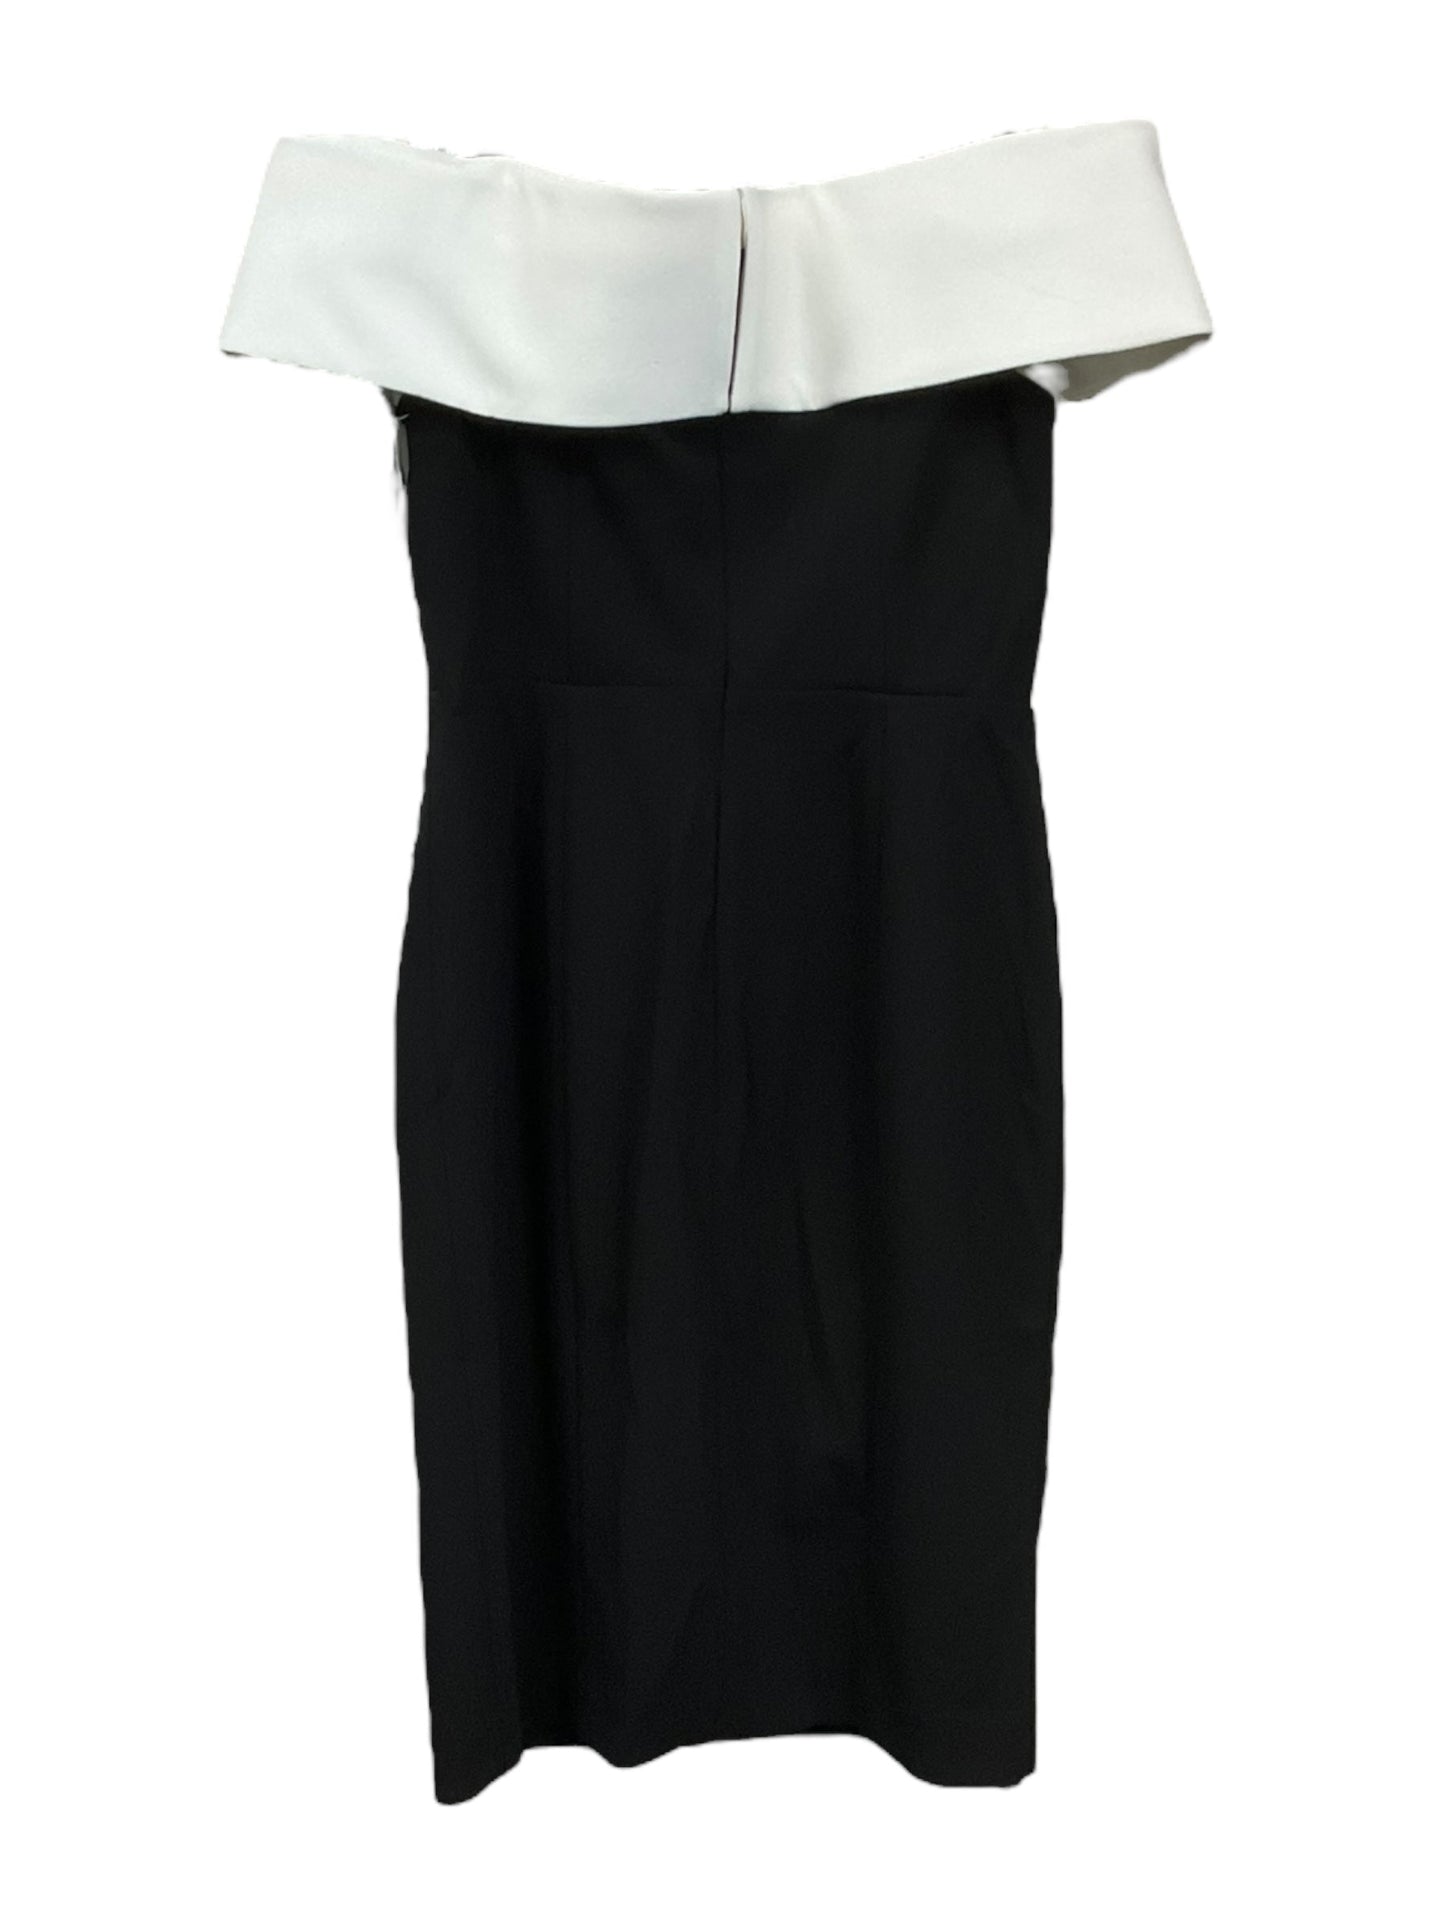 Black & White Dress Designer Calvin Klein, Size 4